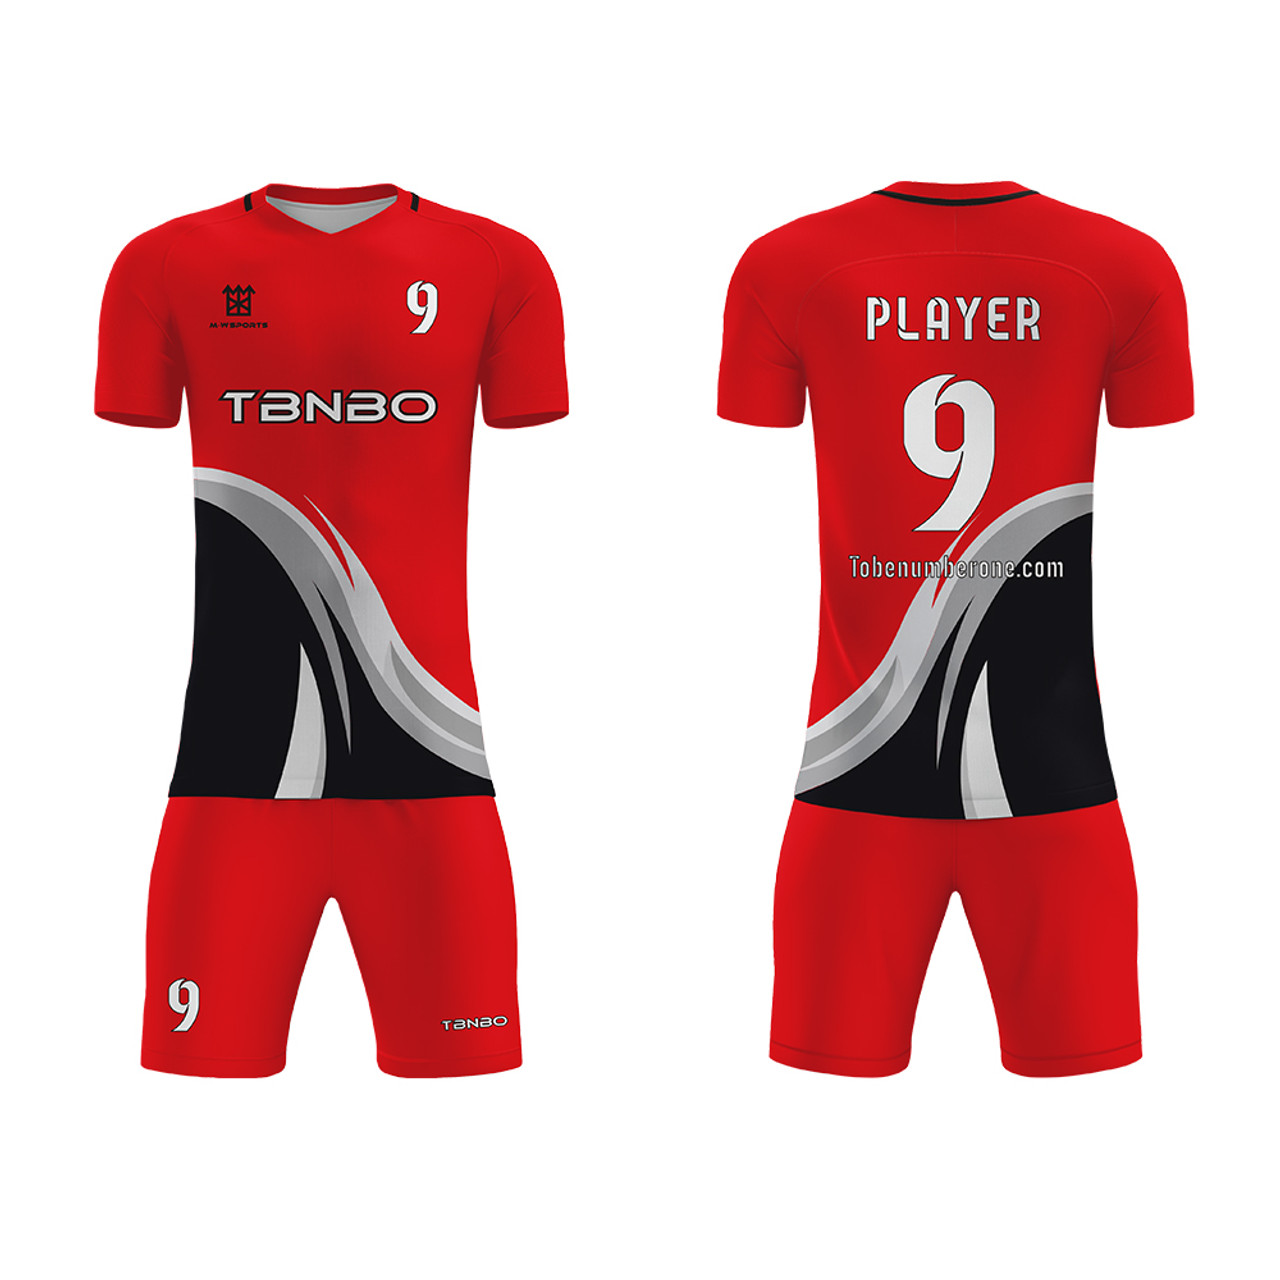 Buy Jersey Design - Red and Black Line Soccer Jersey Design